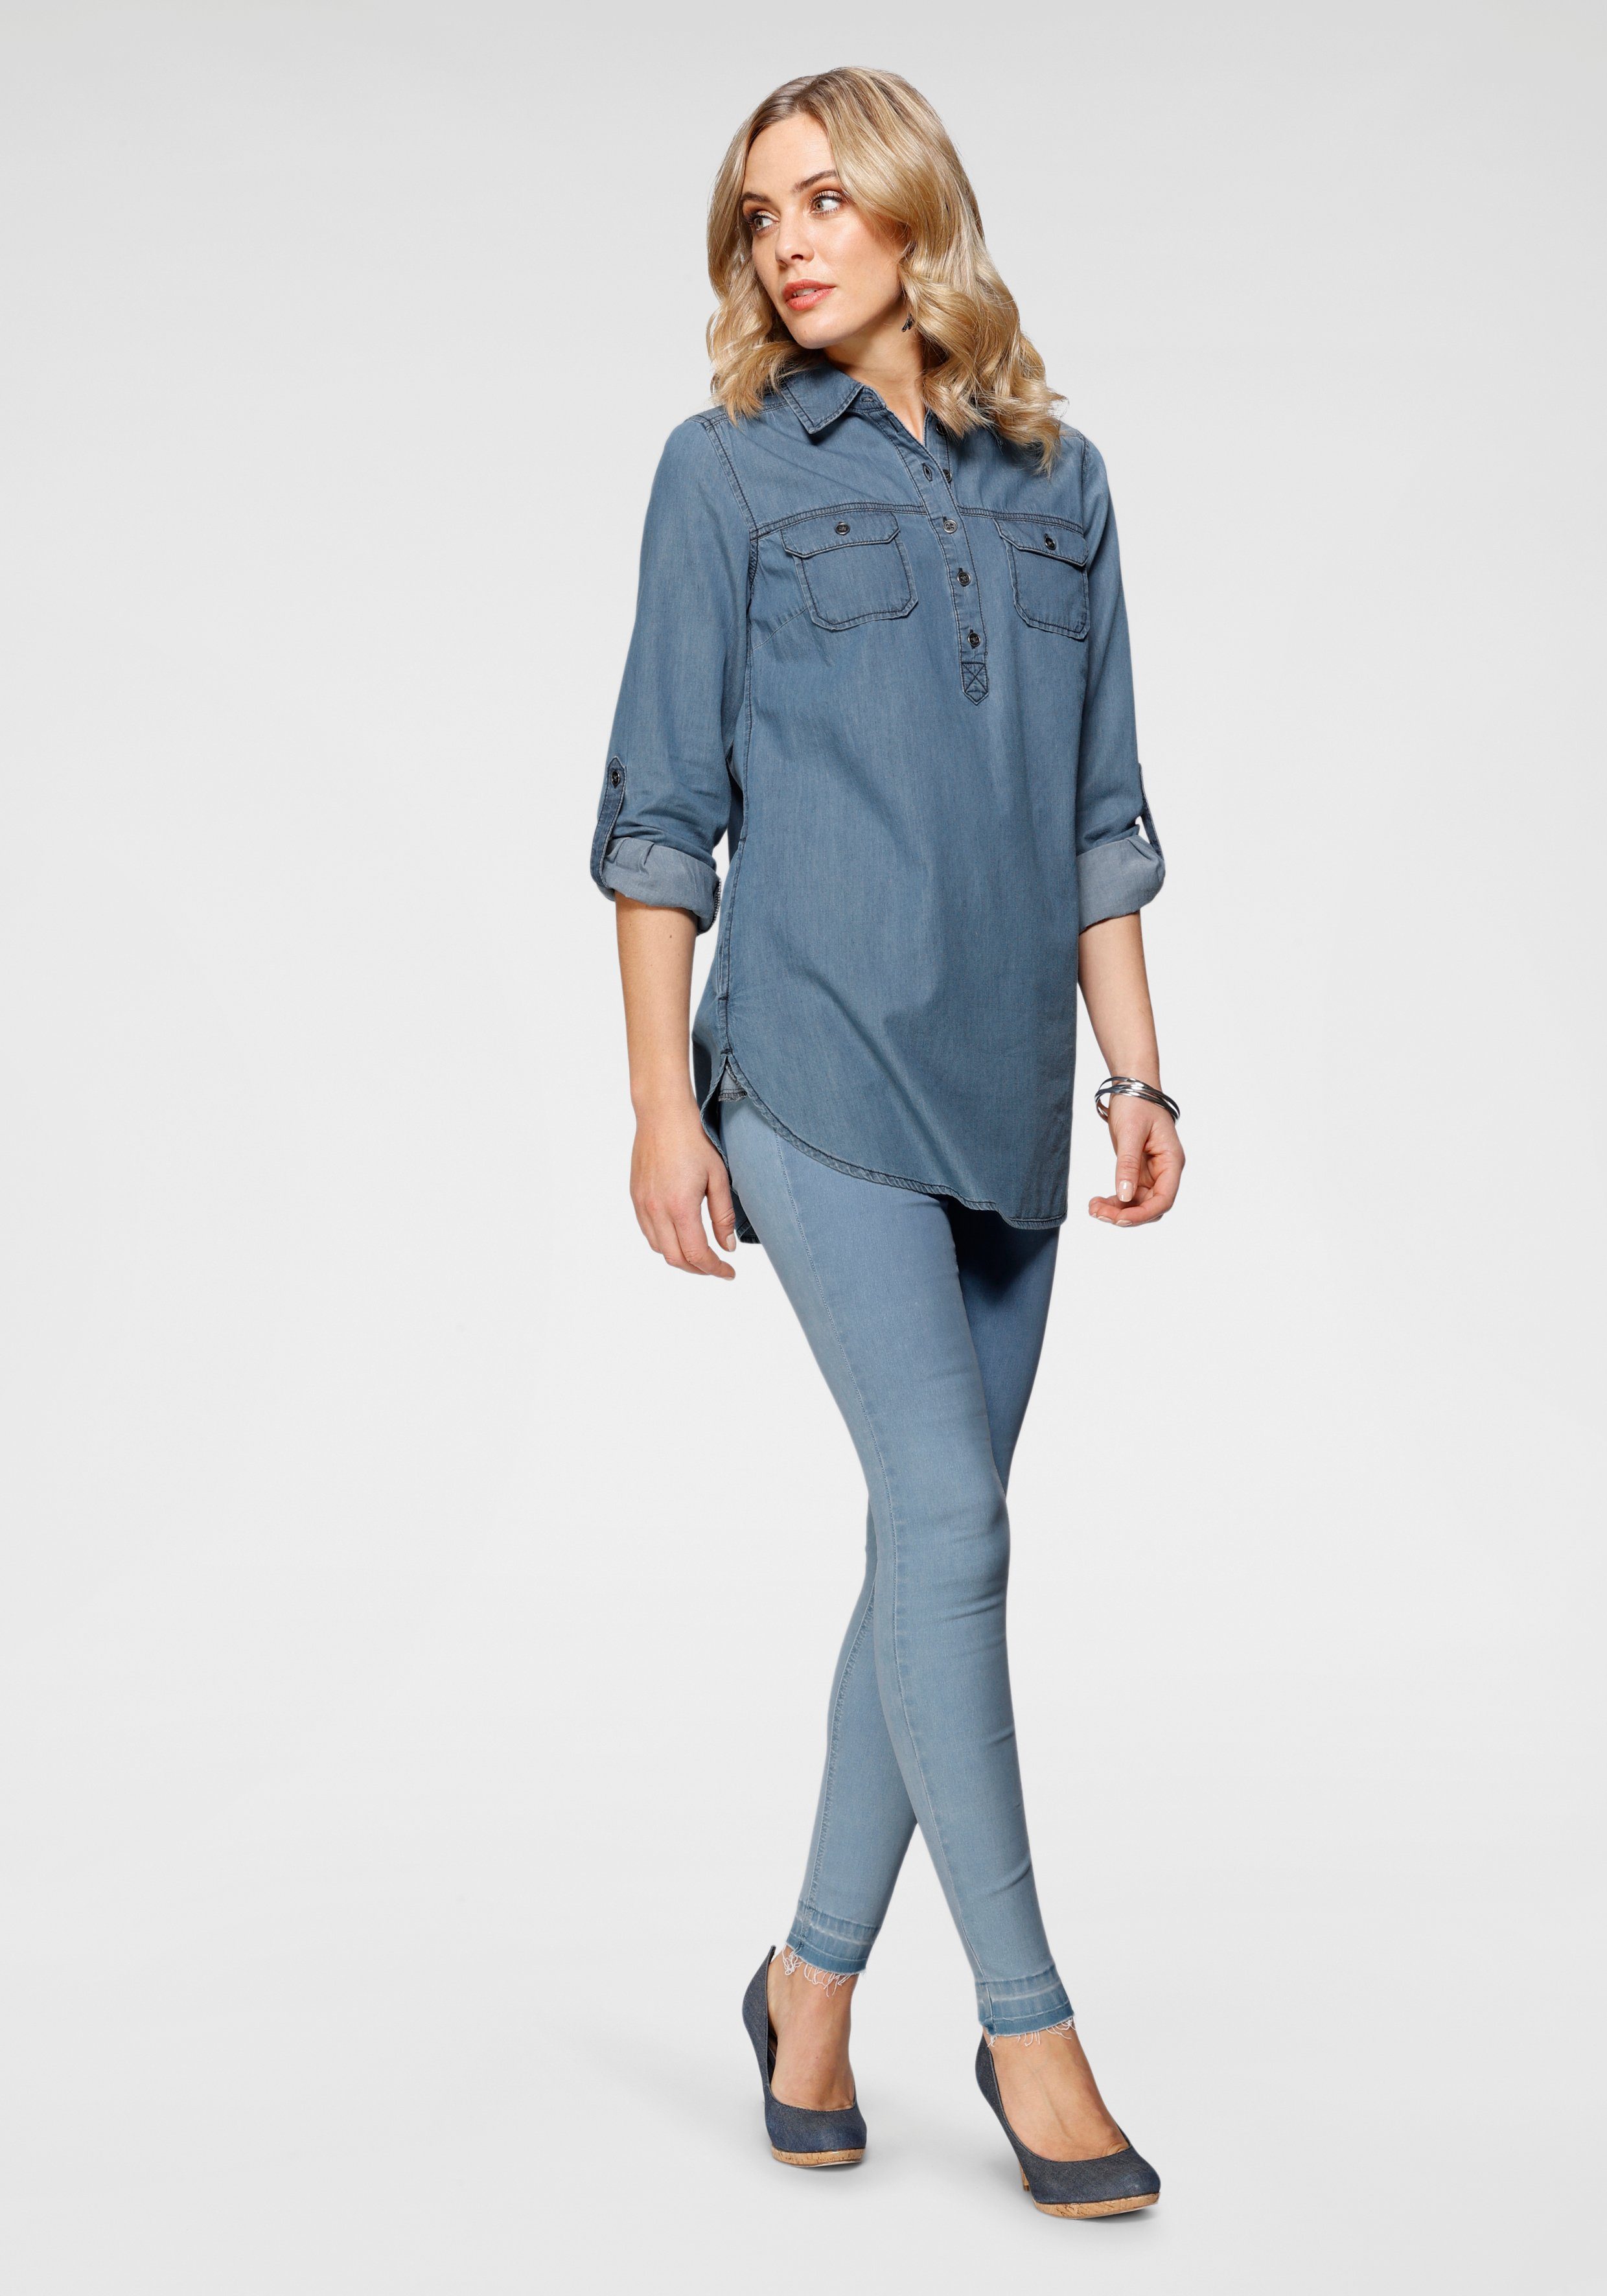 Arizona Skinny-fit-Jeans light-blue offenem Waist Saum mit Stretch Ultra High